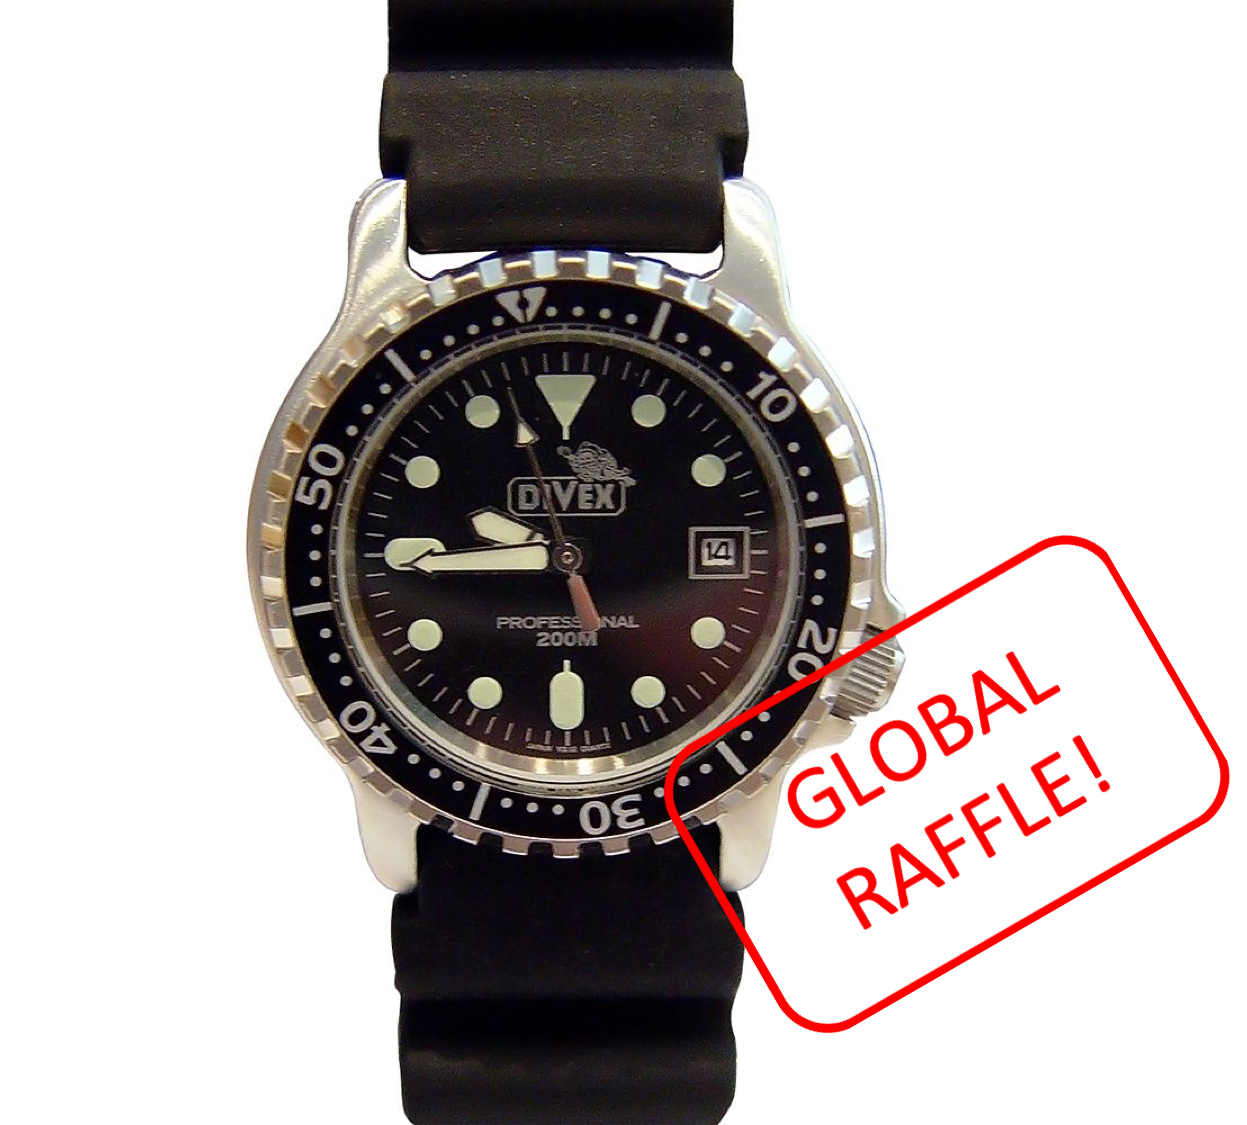 RAFFLE ITEM: Divex Ladies' Professional 200 Watch